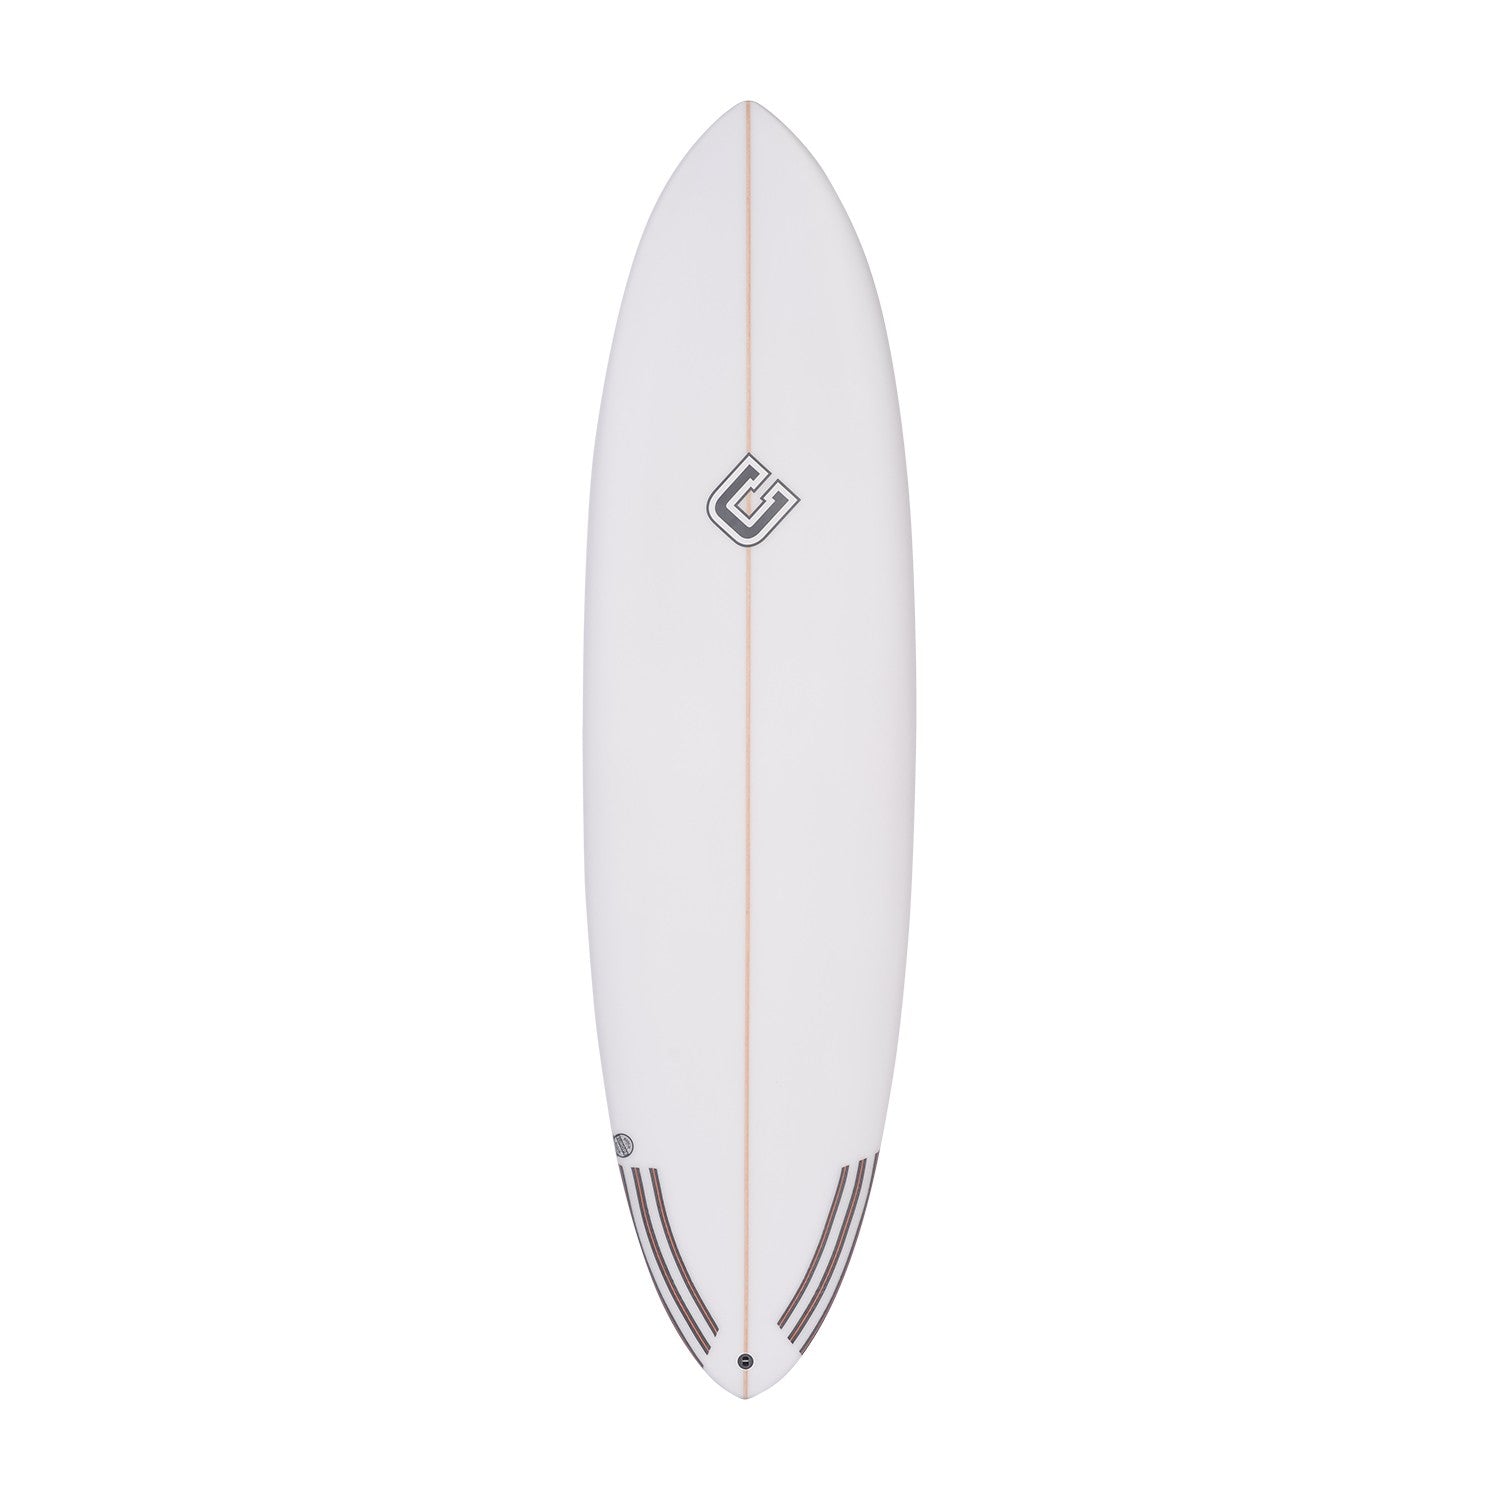 CLAYTON Surfboards - Evo - Futures (PU) - 7'4